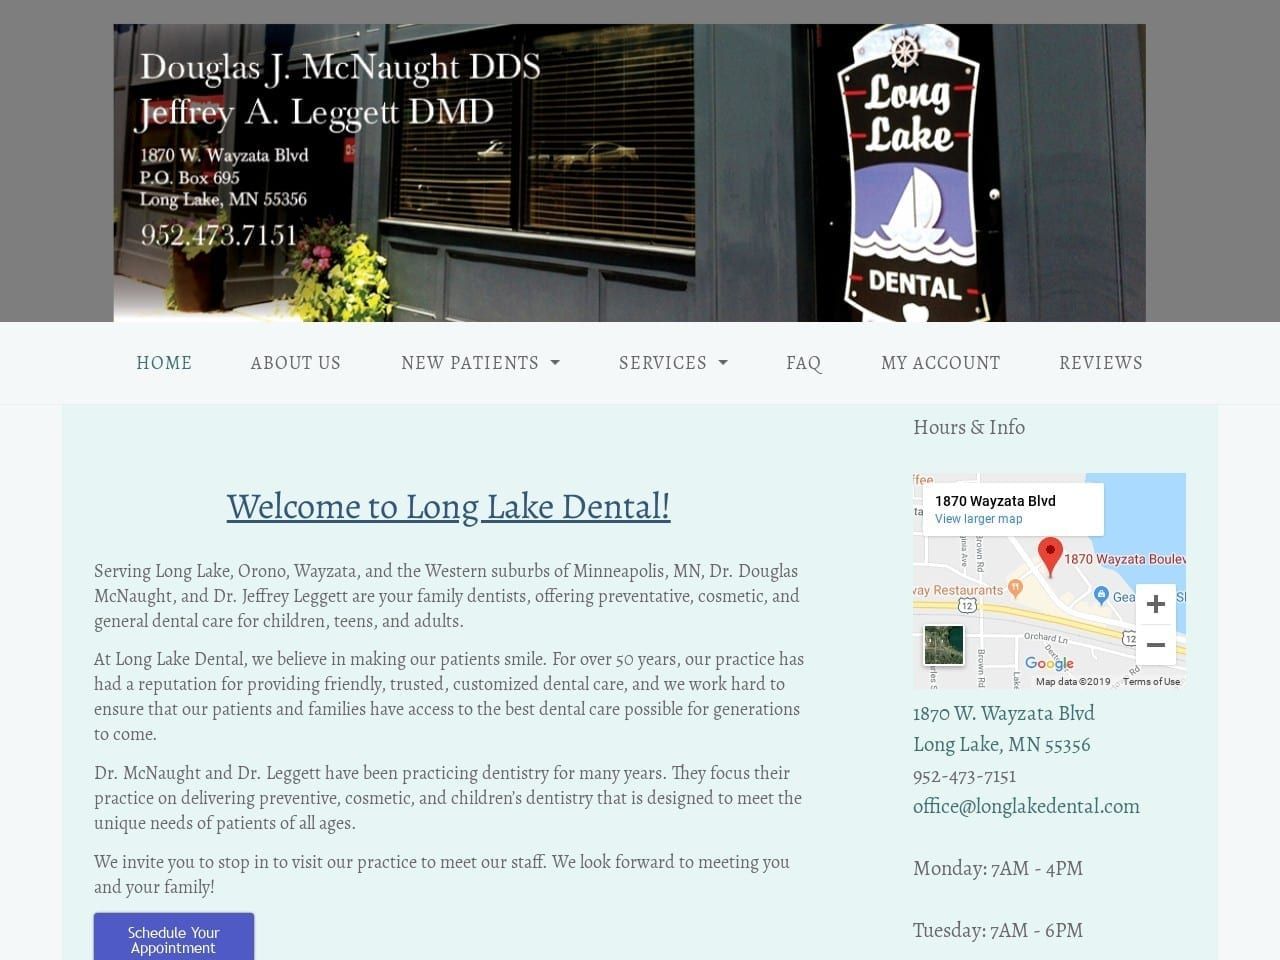 Long Lake Dental Website Screenshot from longlakedental.com